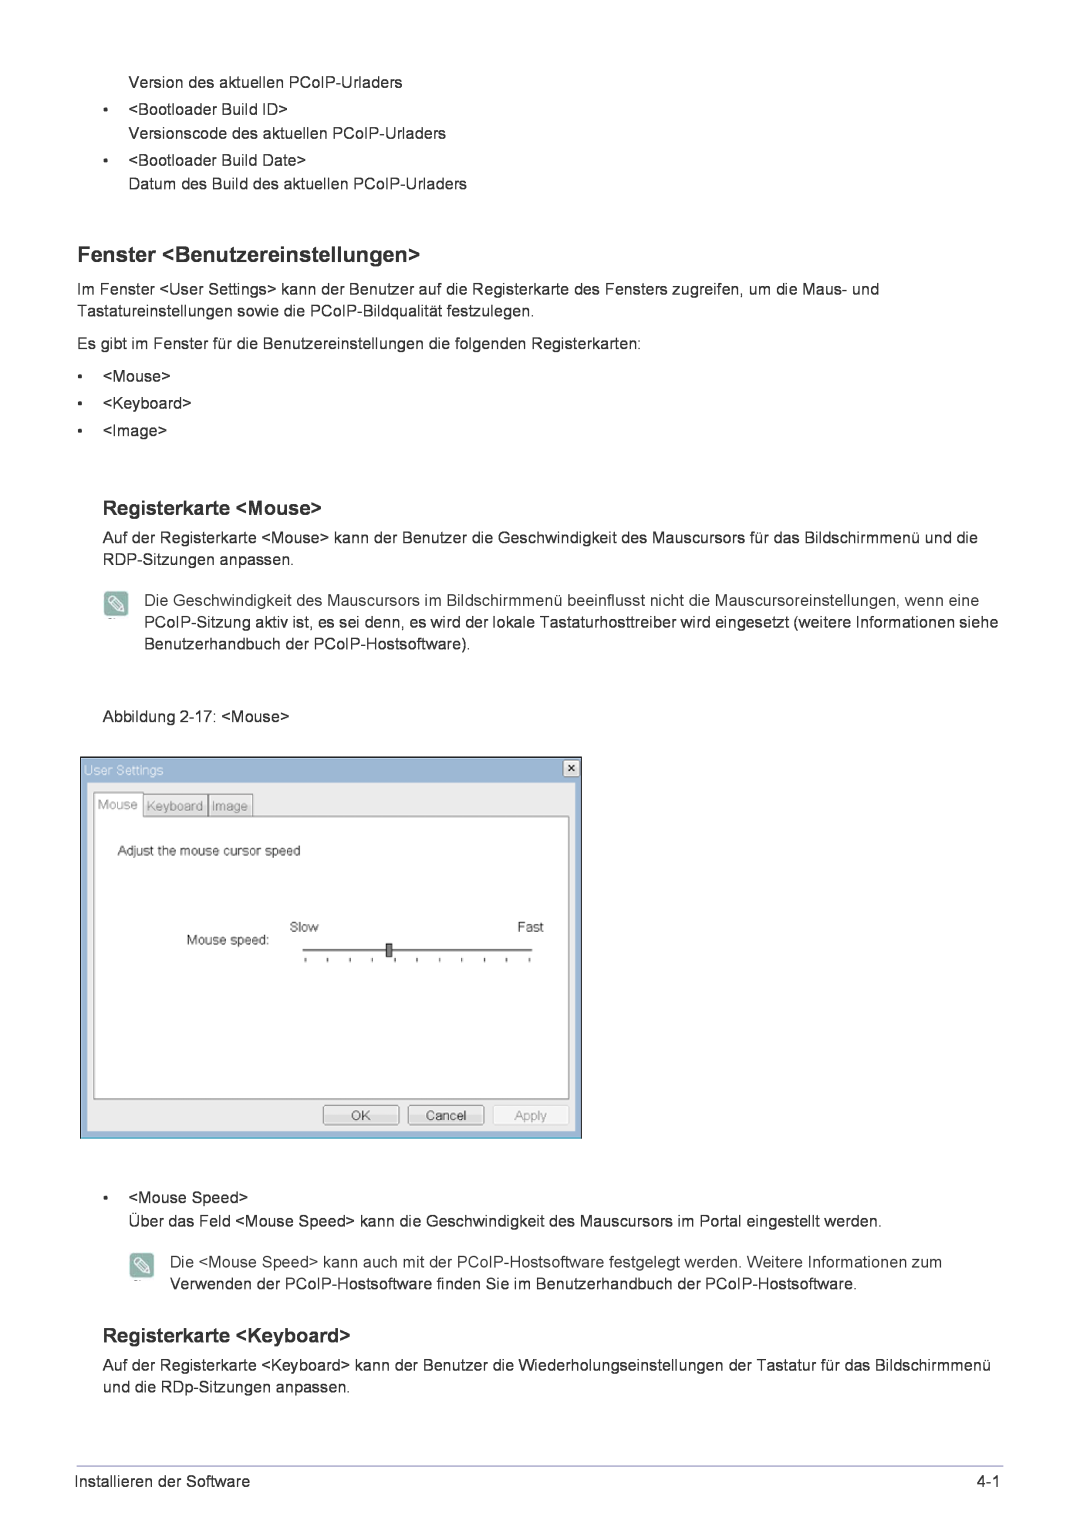 Samsung LF22NPBHBNP/EN manual Fenster Benutzereinstellungen, Registerkarte Mouse, Registerkarte Keyboard 